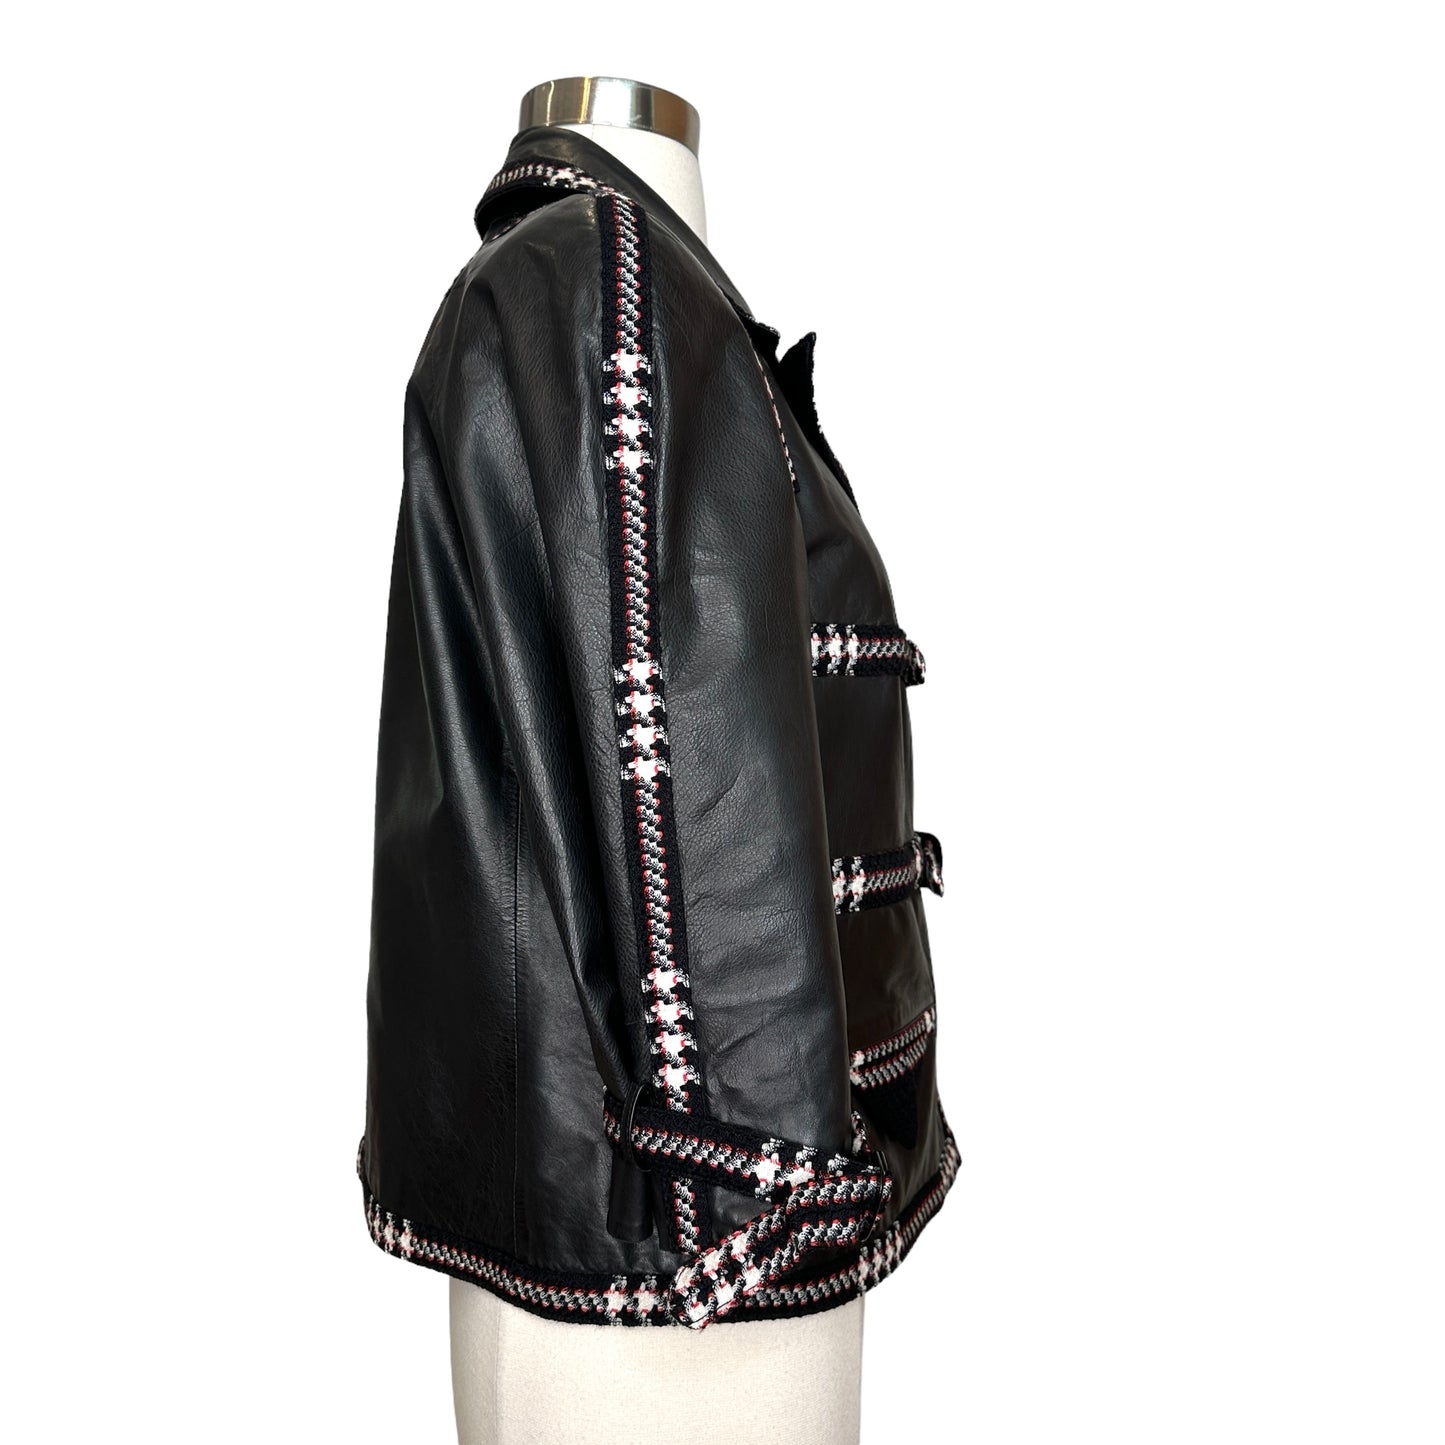 Black Leather Jacket w/Tweed - M